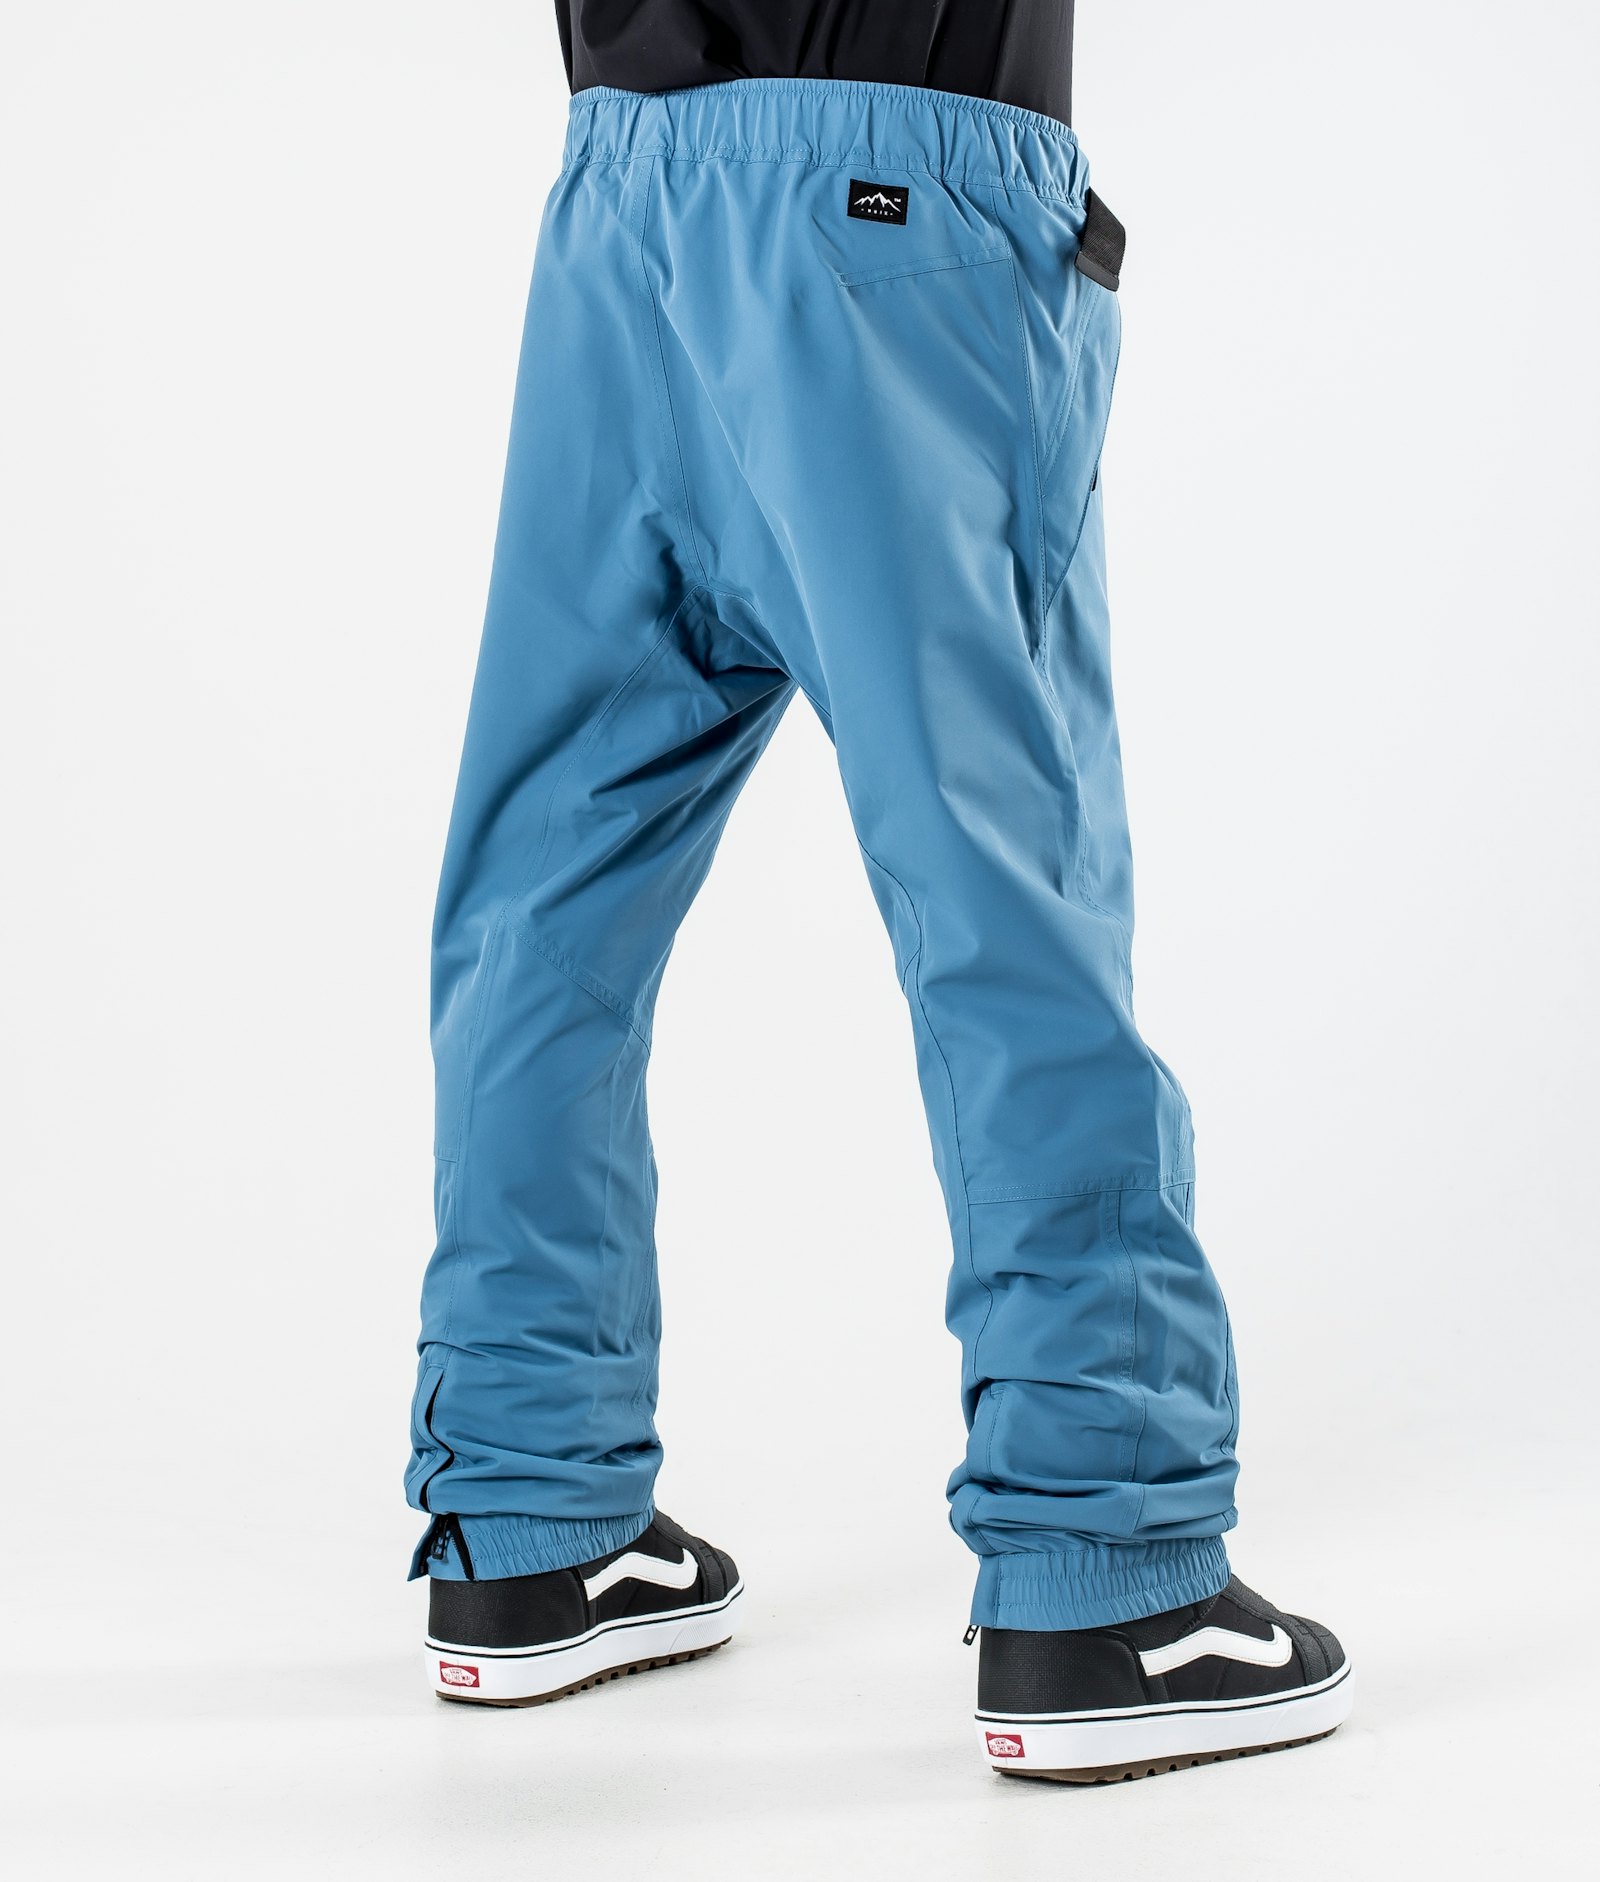 Dope Blizzard 2020 Pantalones Snowboard Hombre Blue Steel